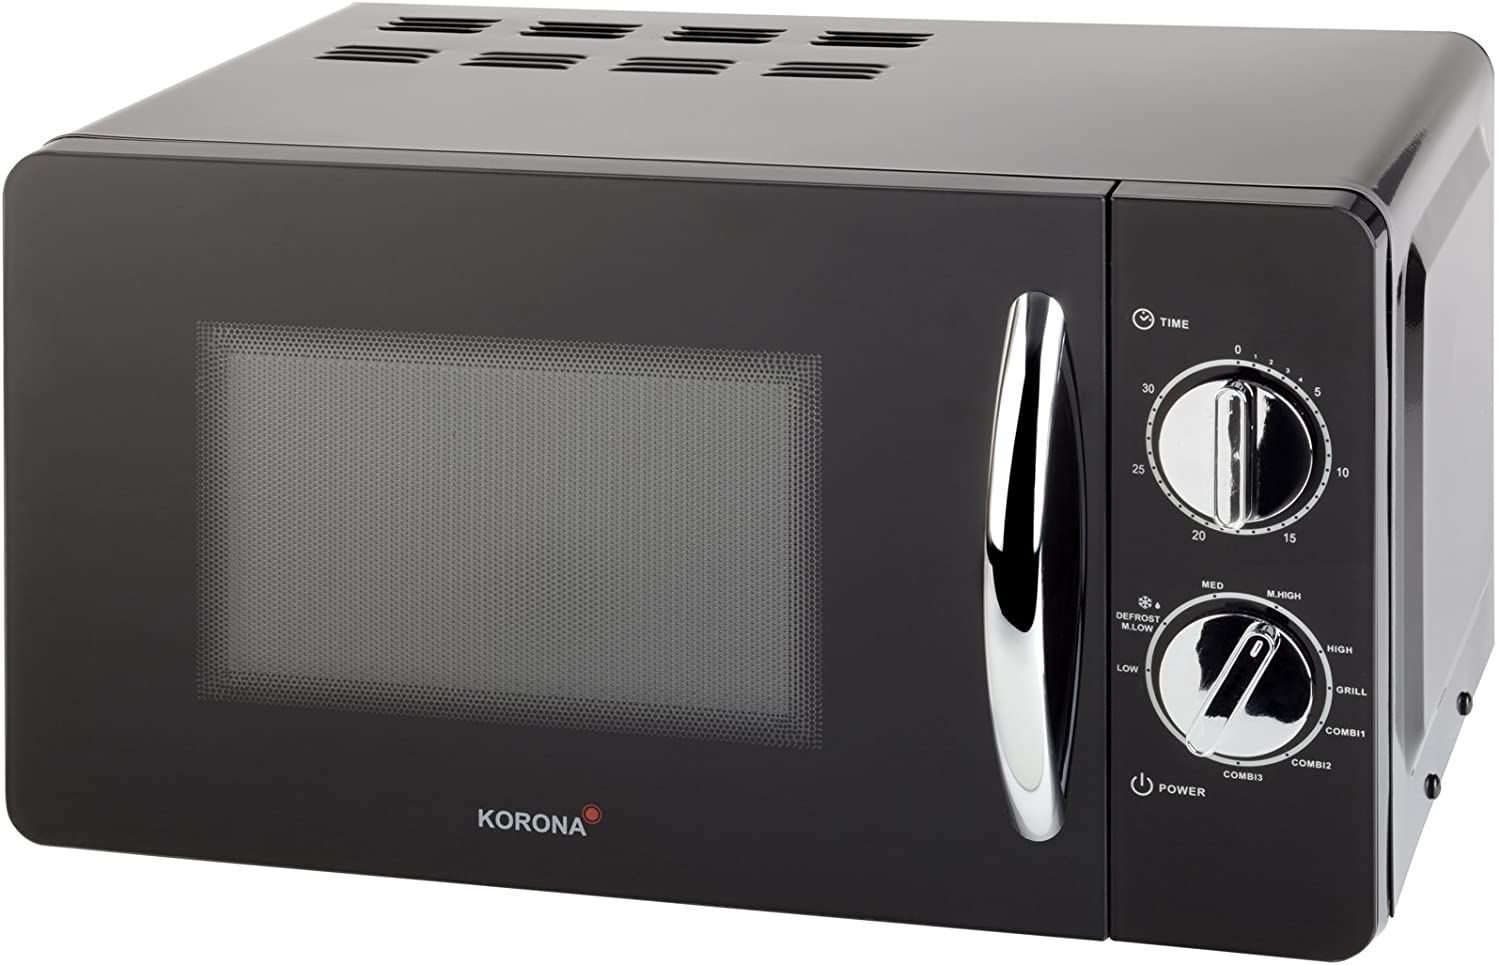 Korona - Microwave 58040 I 700 W I 20 litres I 5 power levels I grill function | black